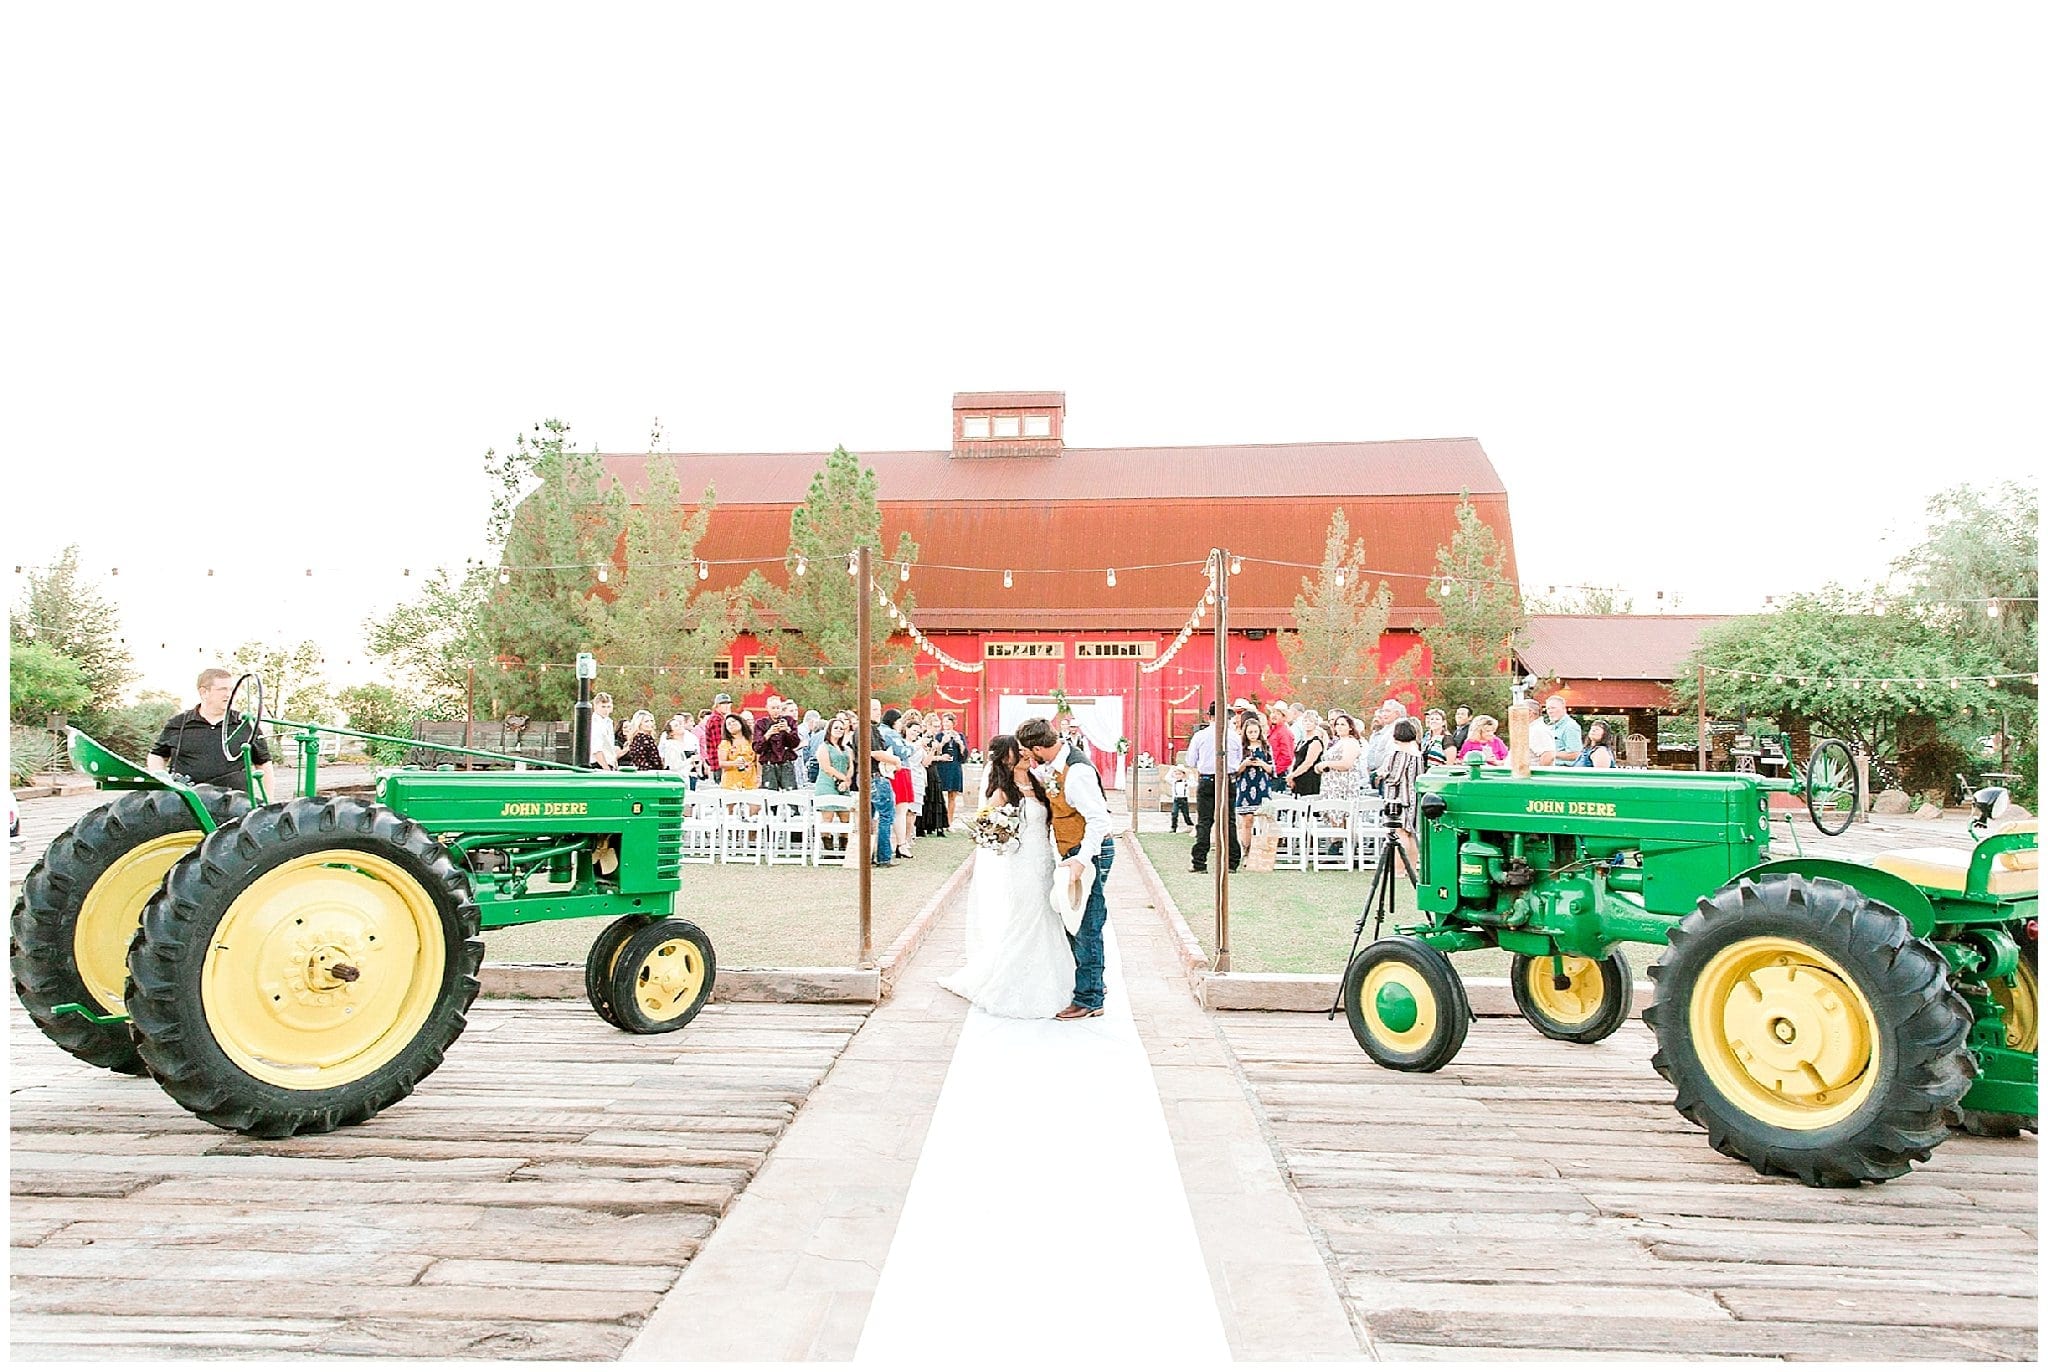 Windmill Winery Barn Wedding, Country Wedding, Outdoor Wedding, Country themed wedding, Tractors, John Deere Wedding, Big Red Barn Wedding